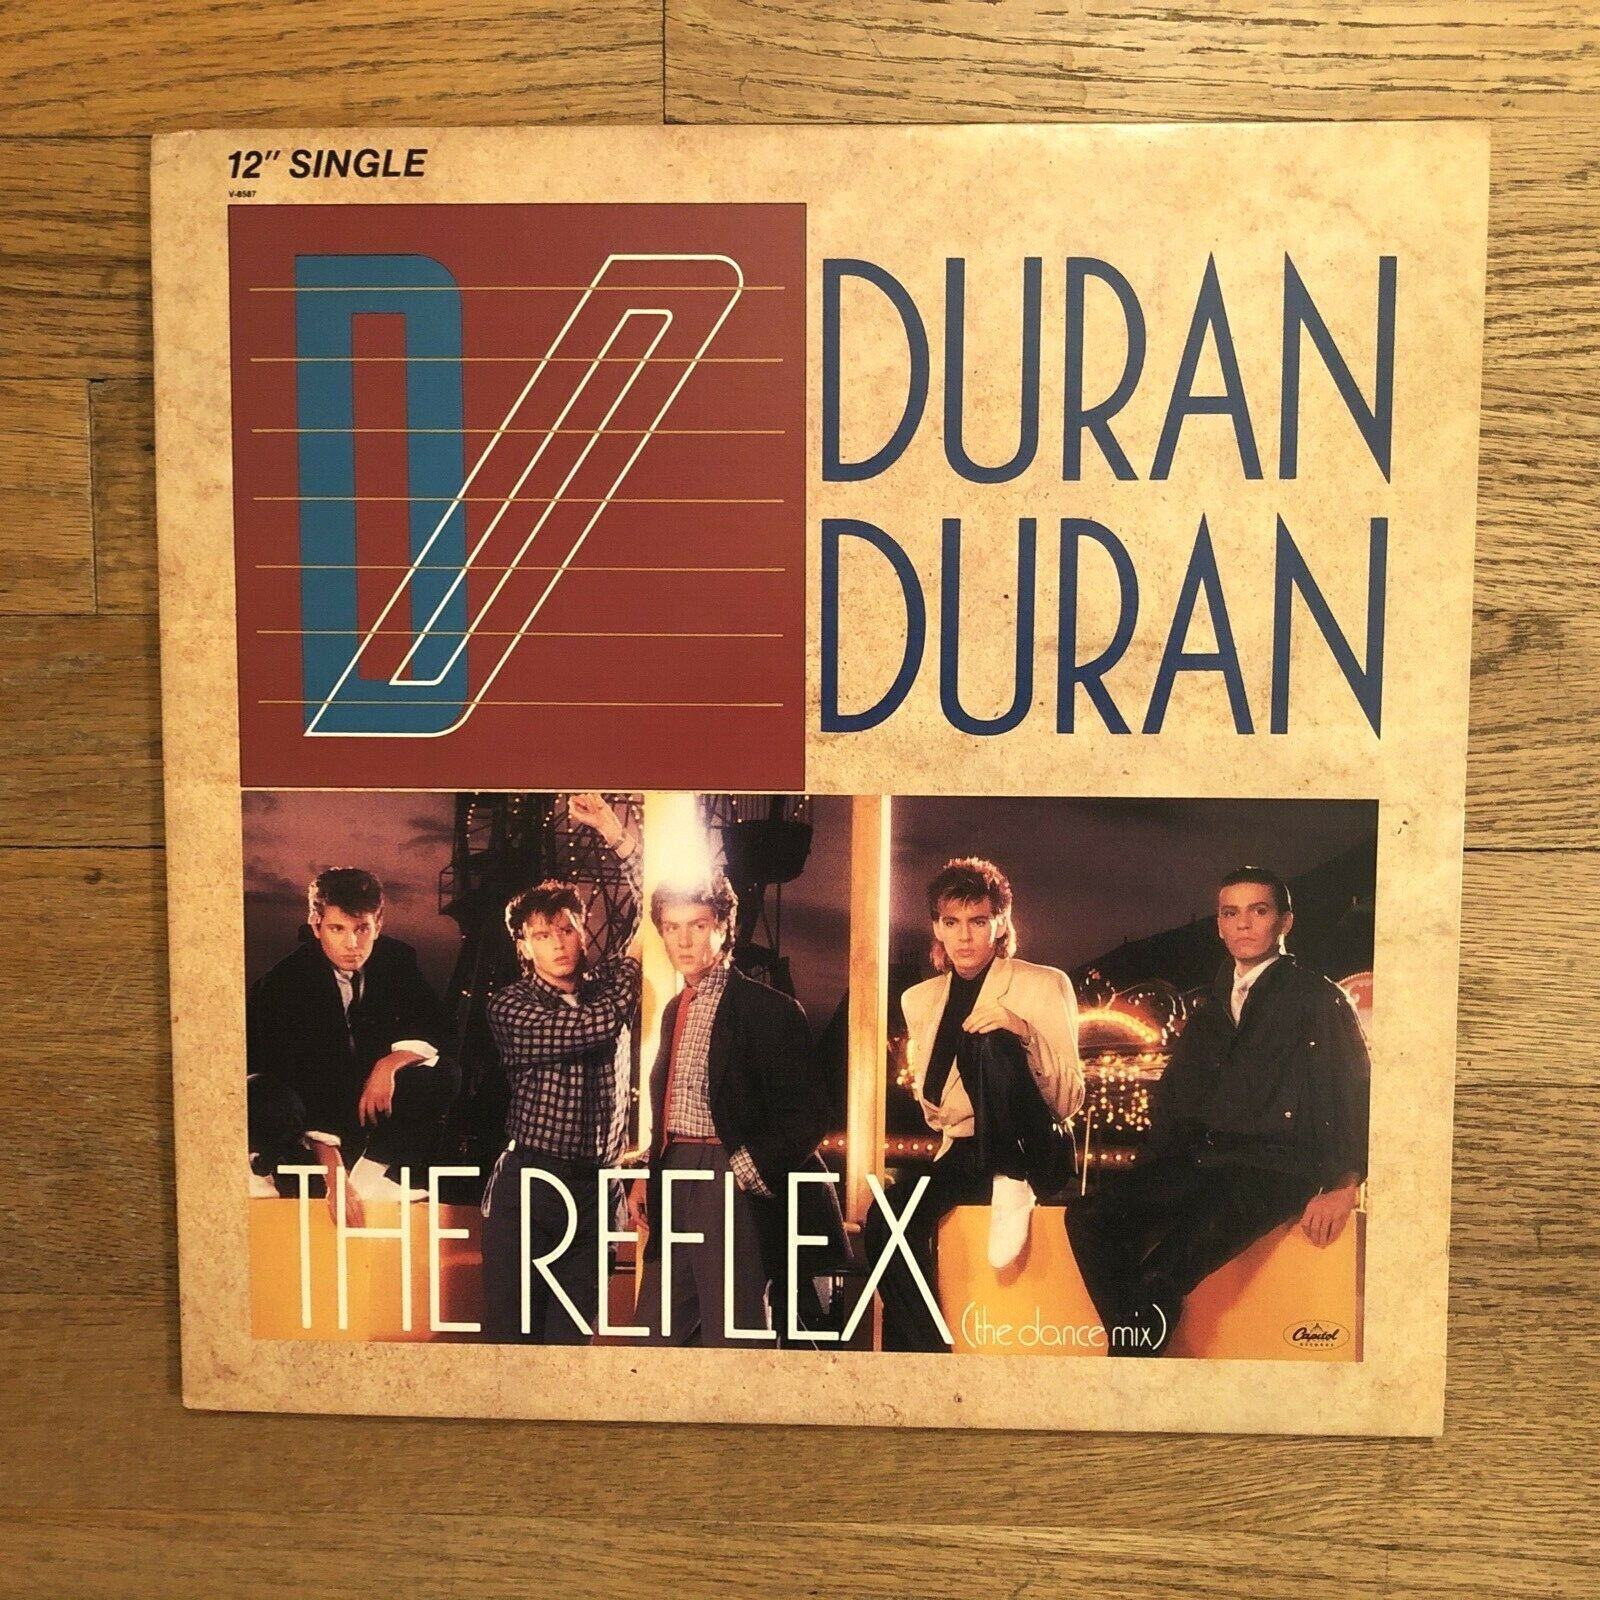 Duran Duran | The Reflex (The Dance Mix) | LP 12” Single | 1983 | Capitol  V-8587